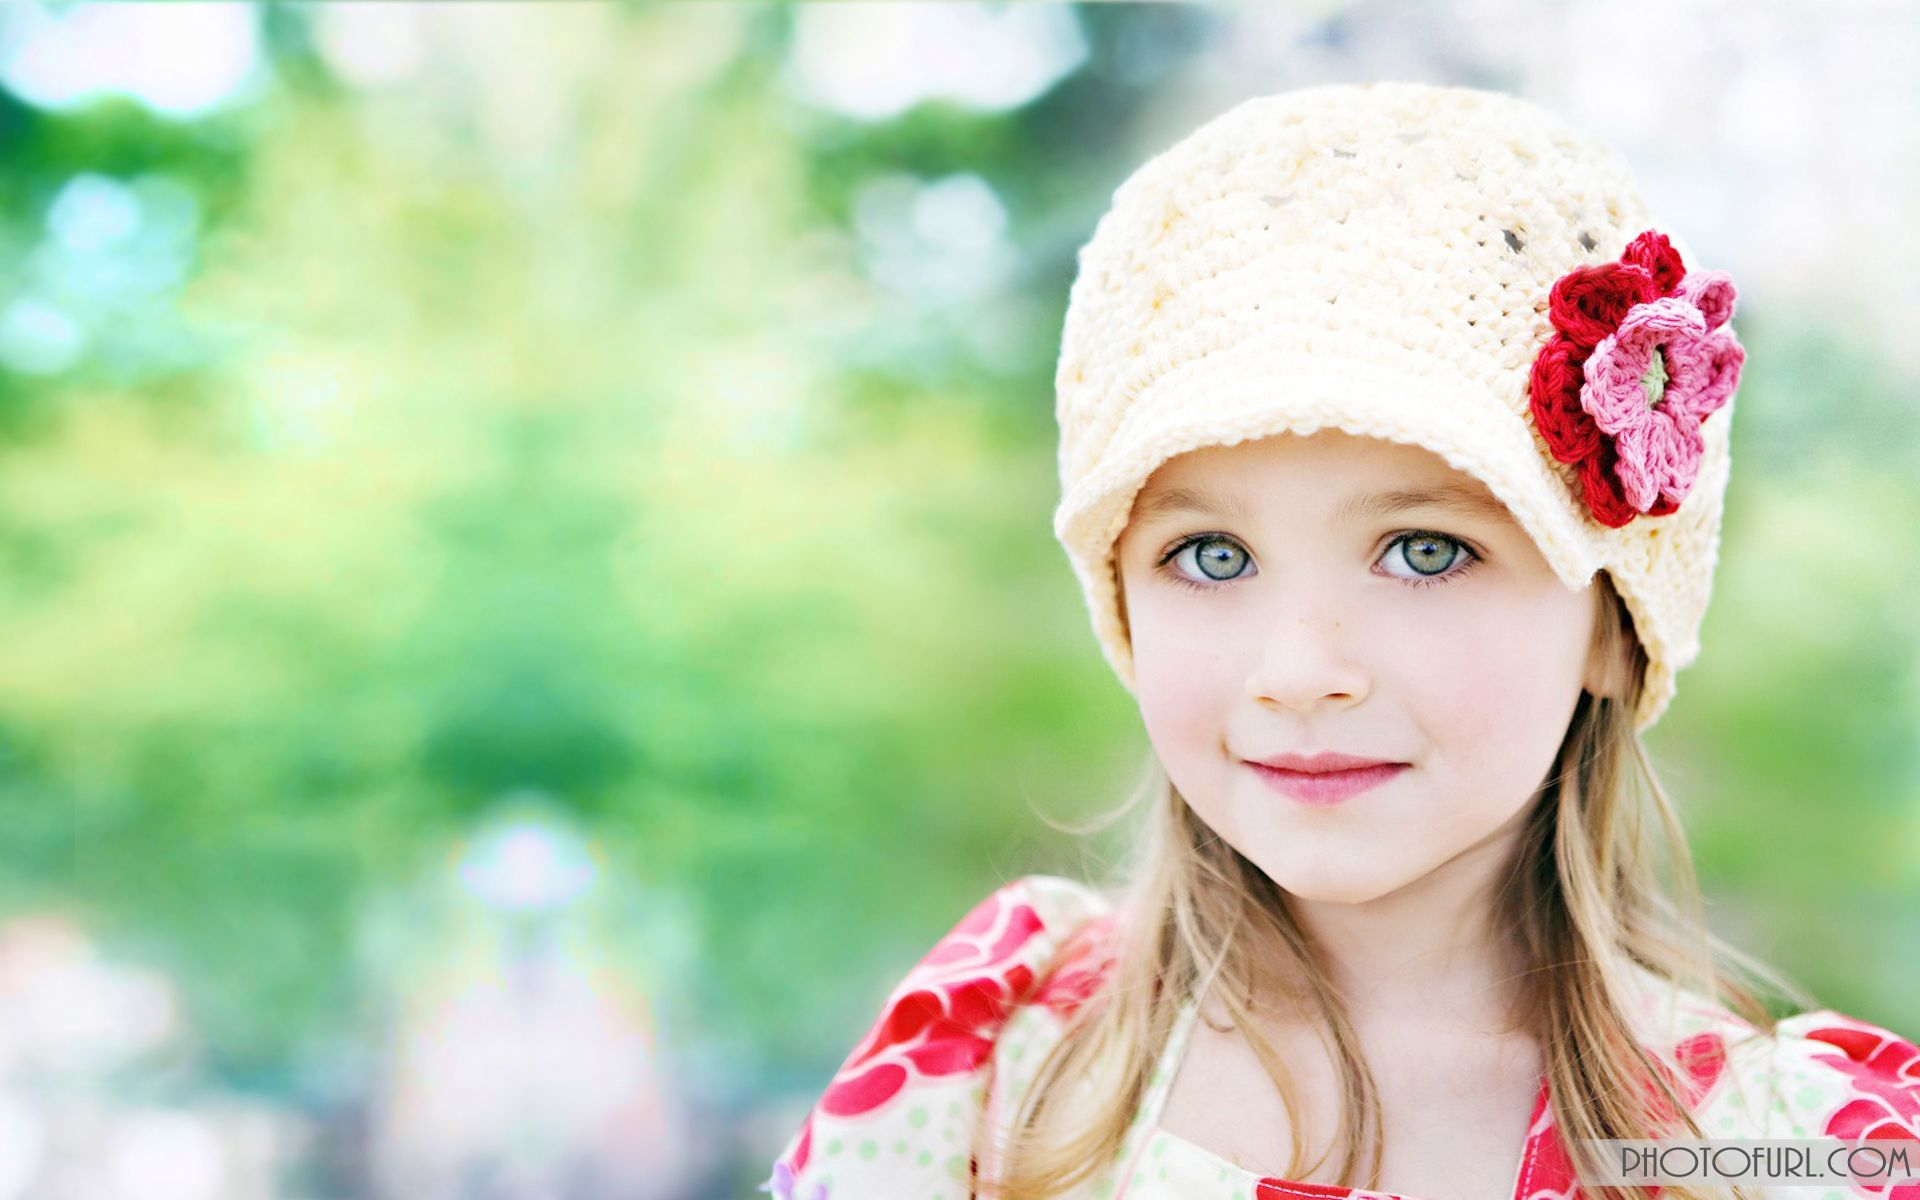 Cute Baby Girl Hd Images Free Download - Beautiful Cute Baby Girl - HD Wallpaper 